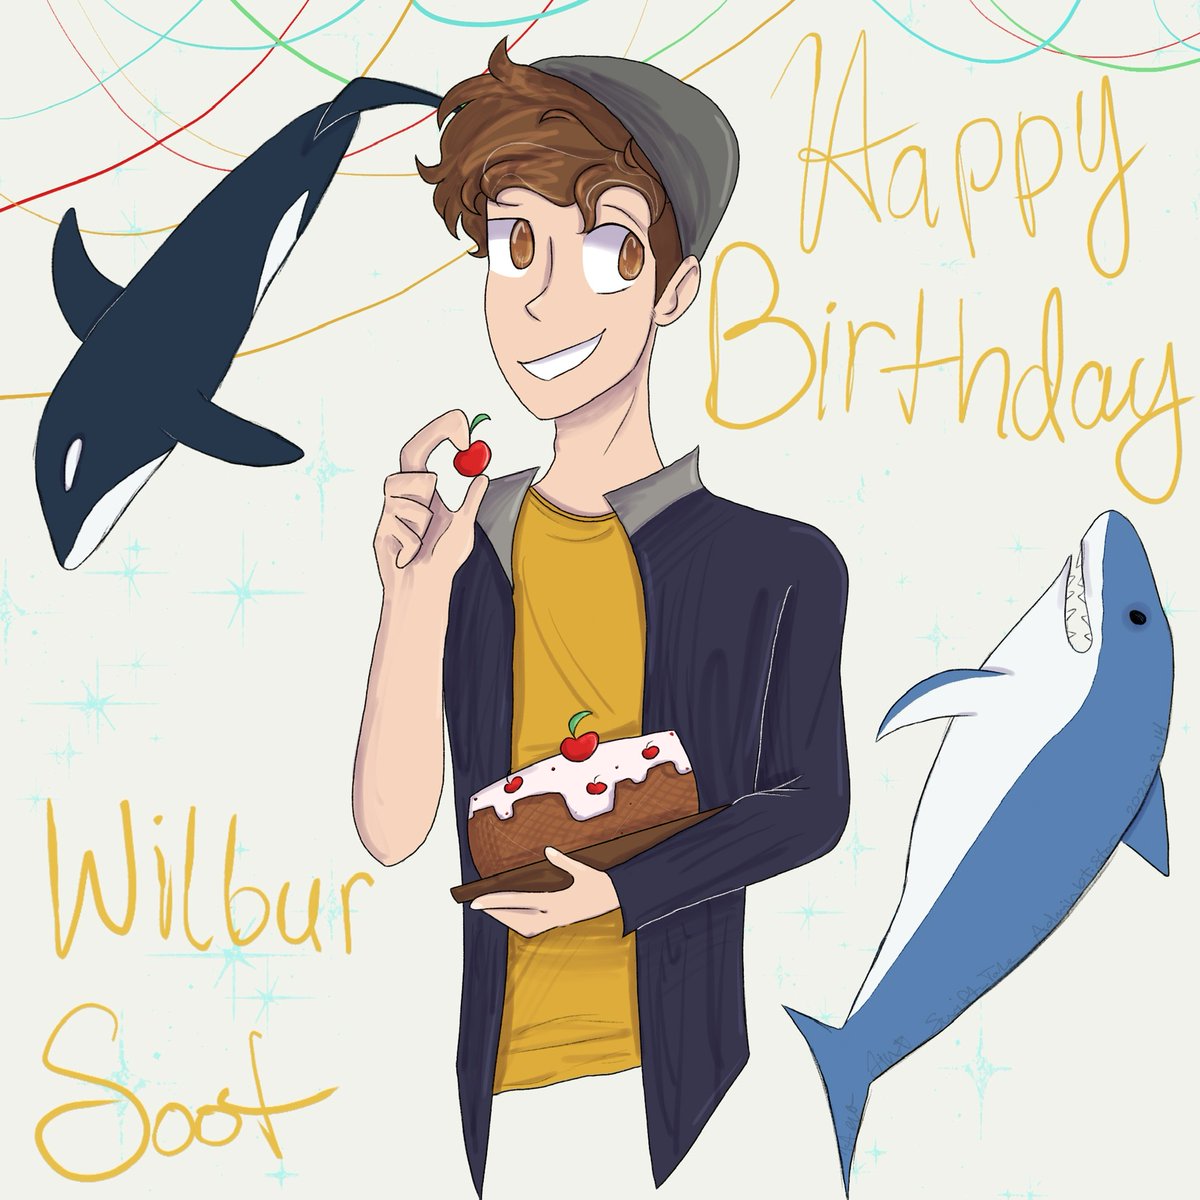 Wilbur soot birthday